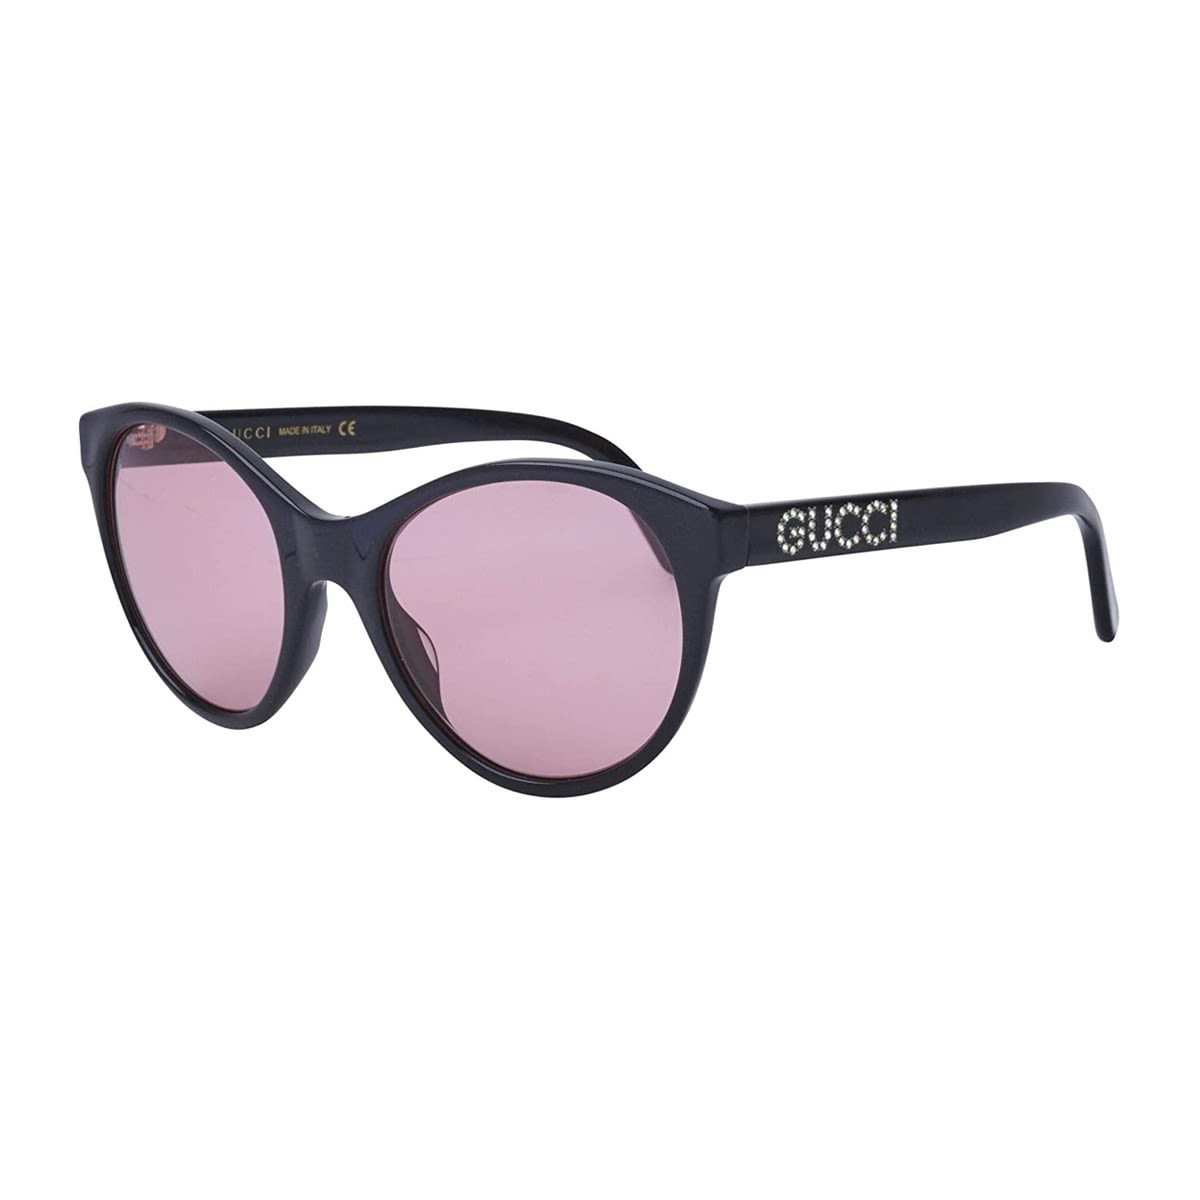 Gucci Eyewear Gg0419s Sunglasses